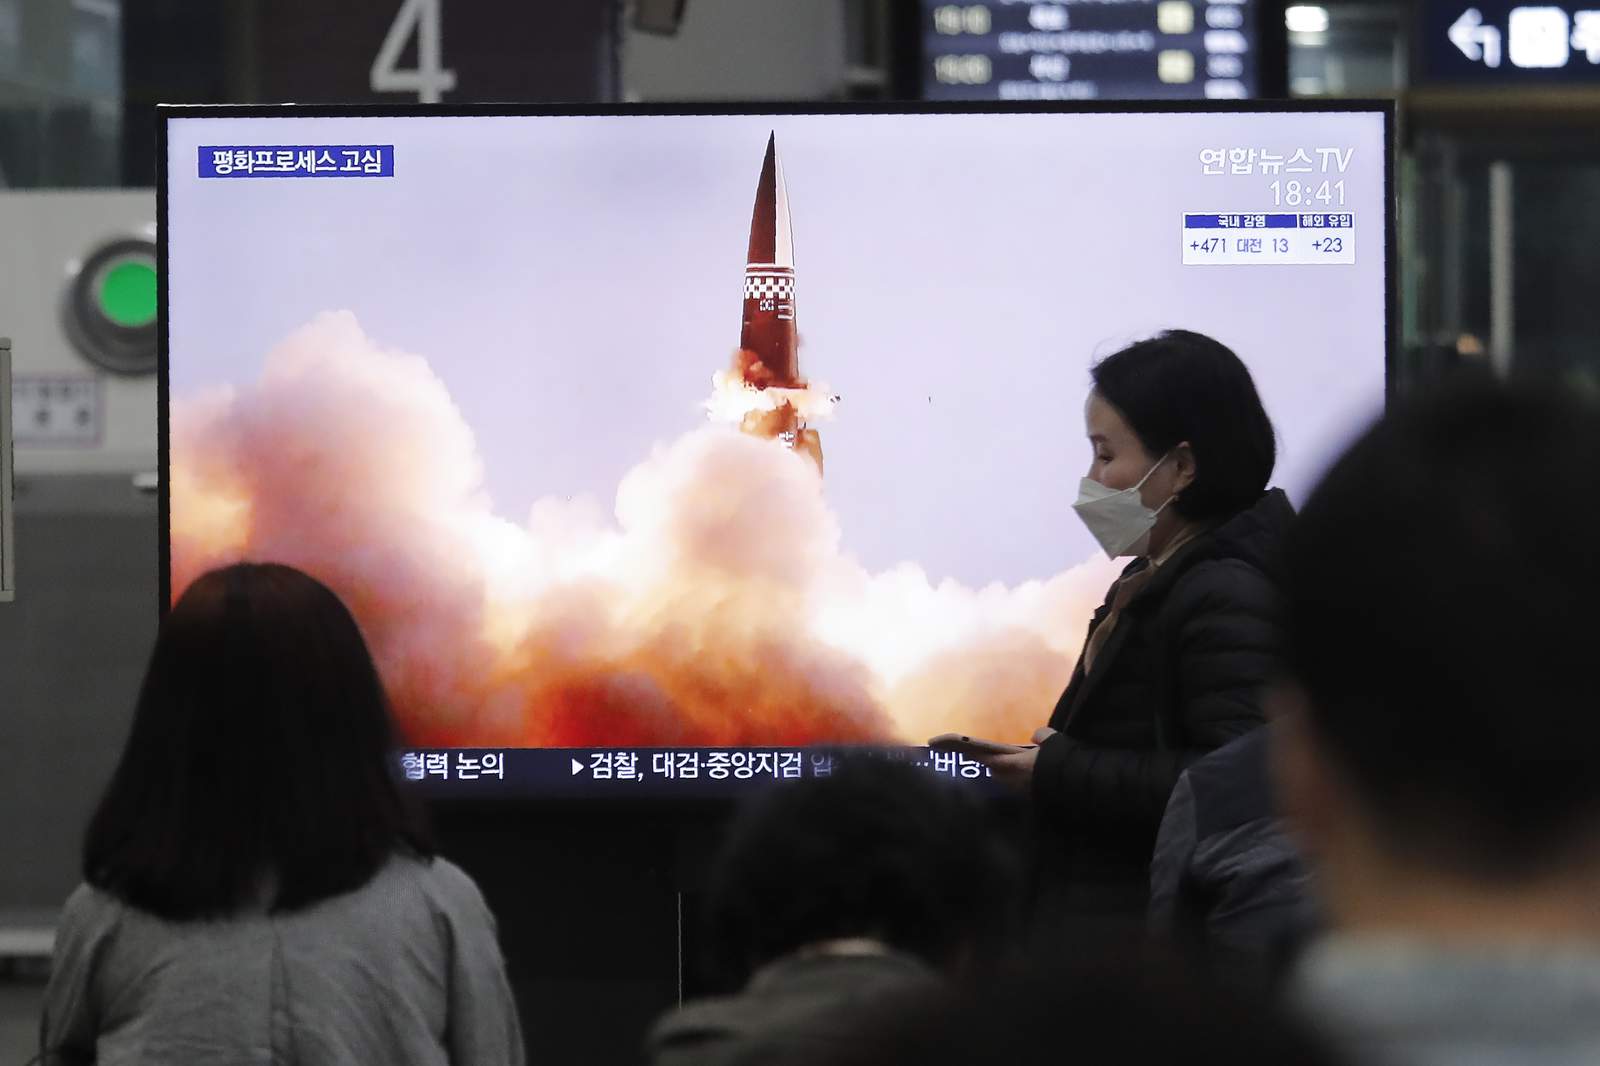 US eyes additional UN action on N. Korea after missile tests